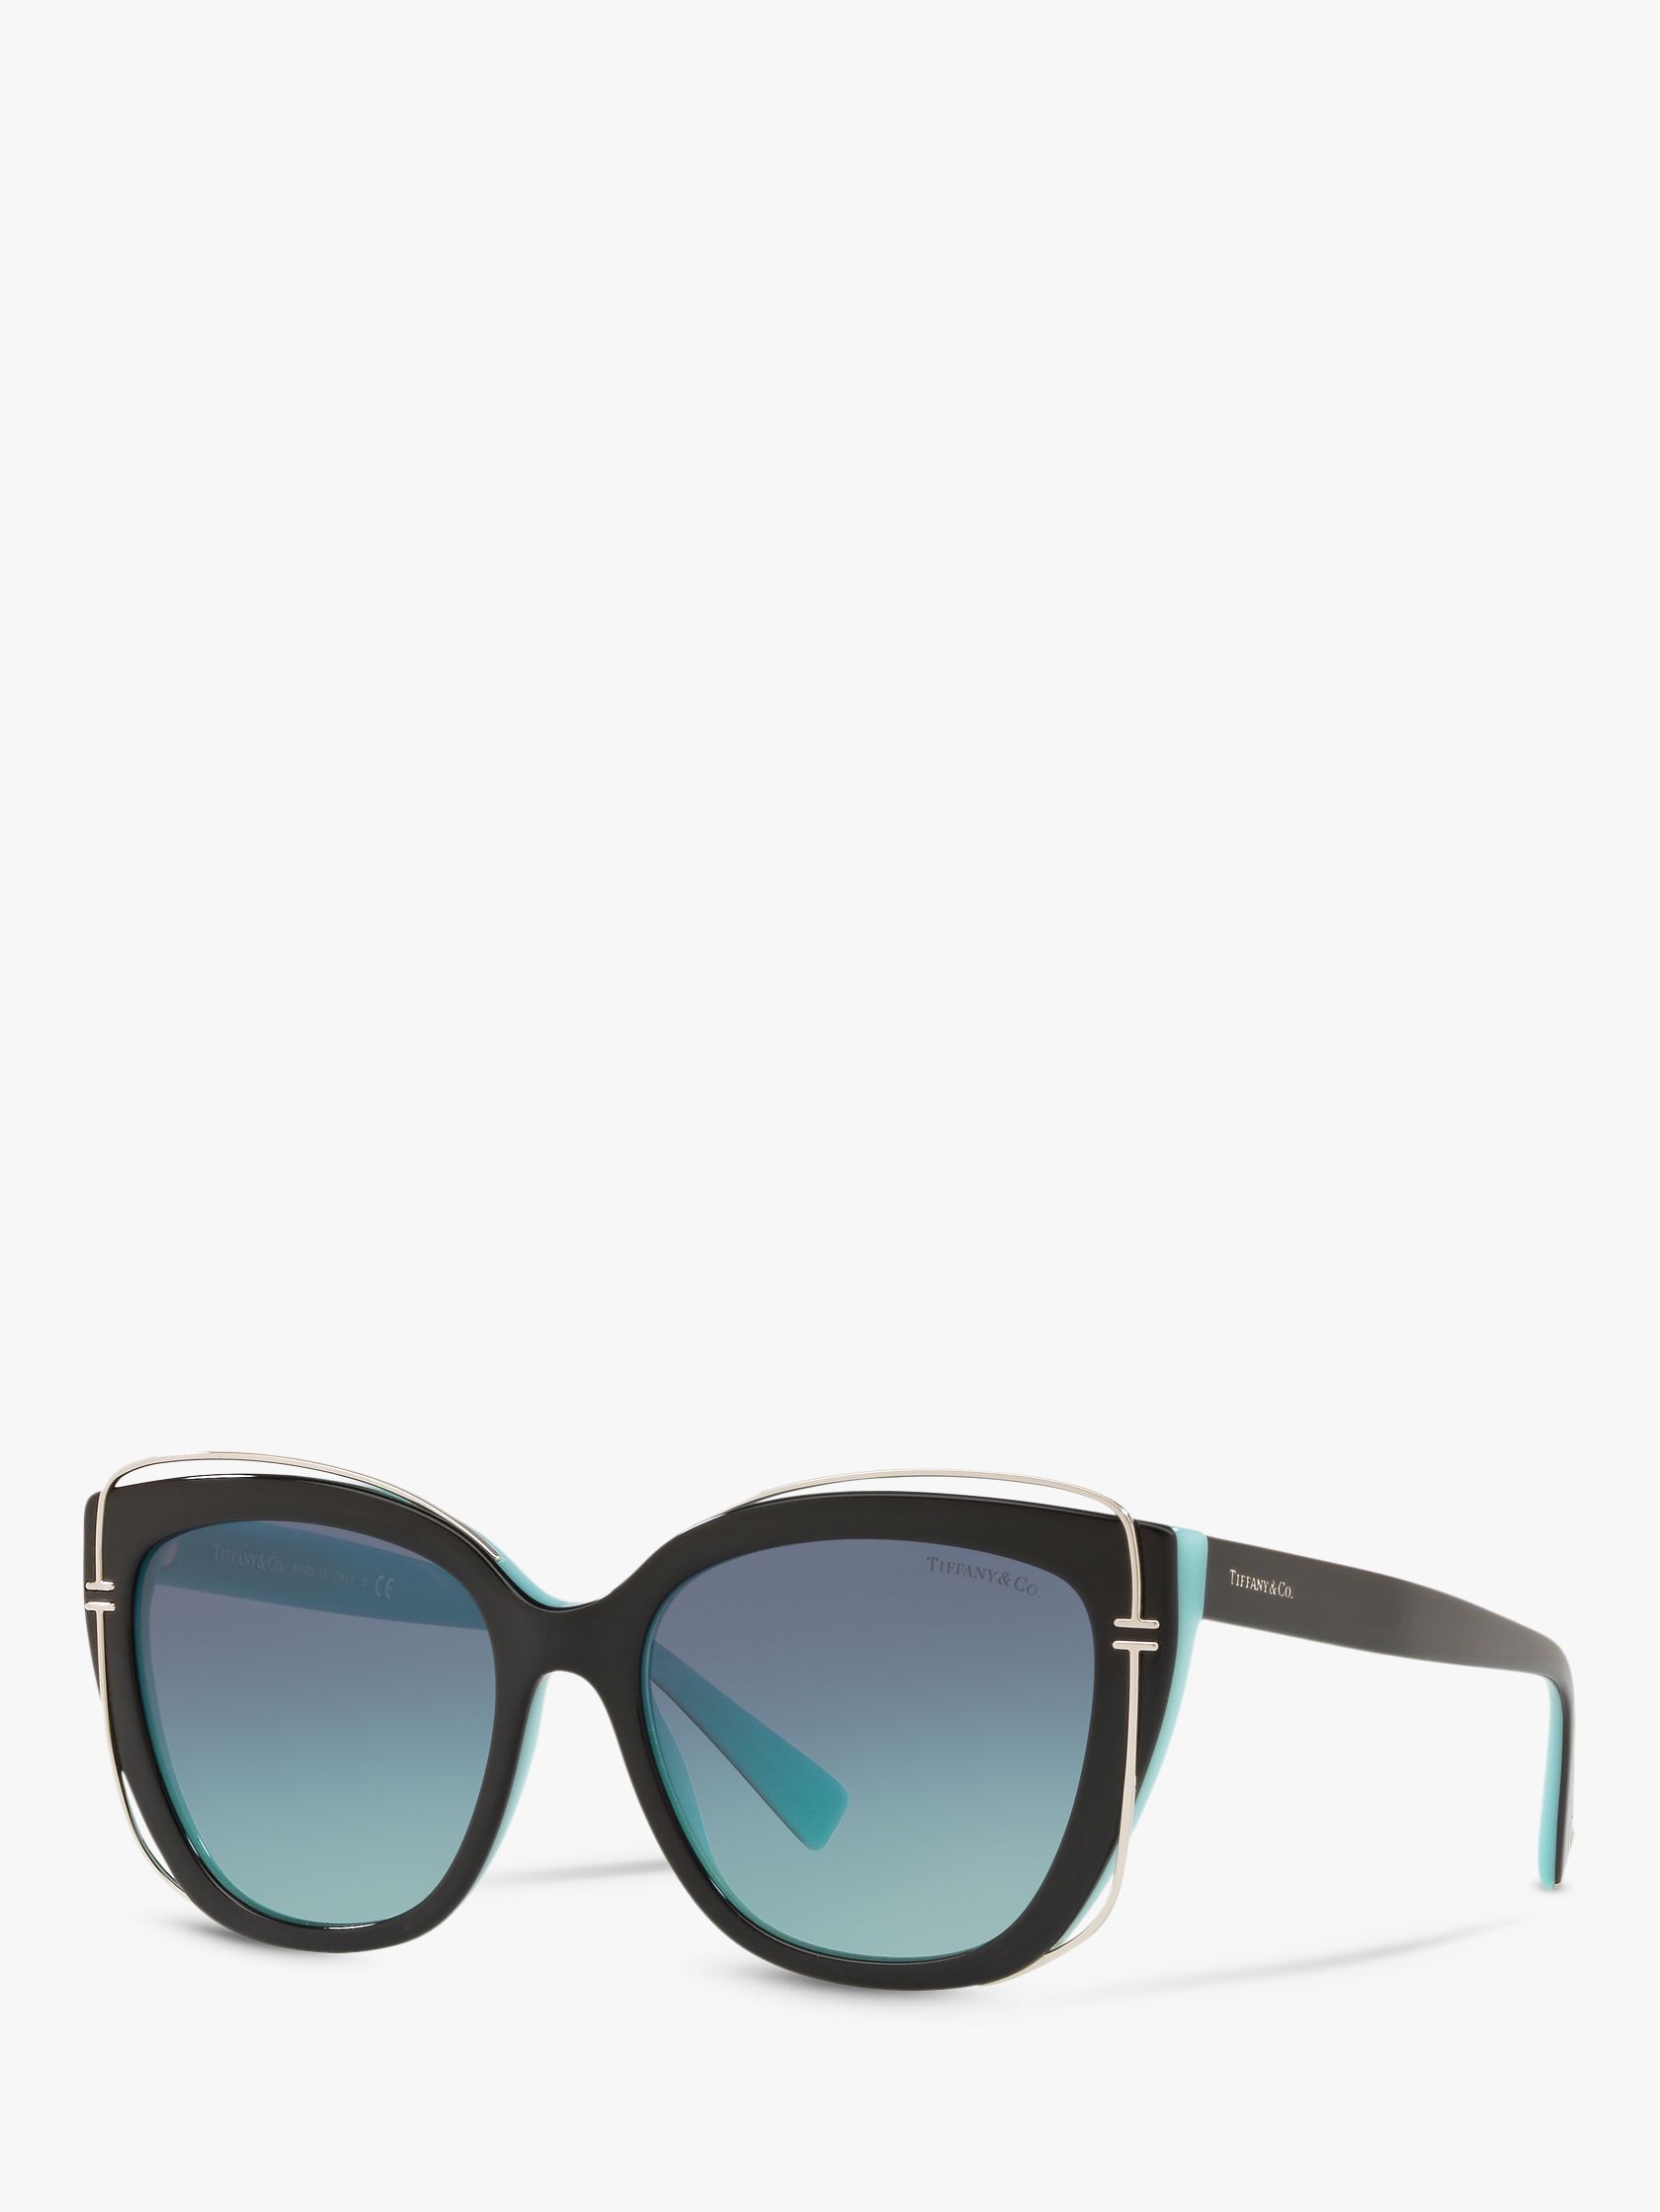 tiffany and co sunglasses blue